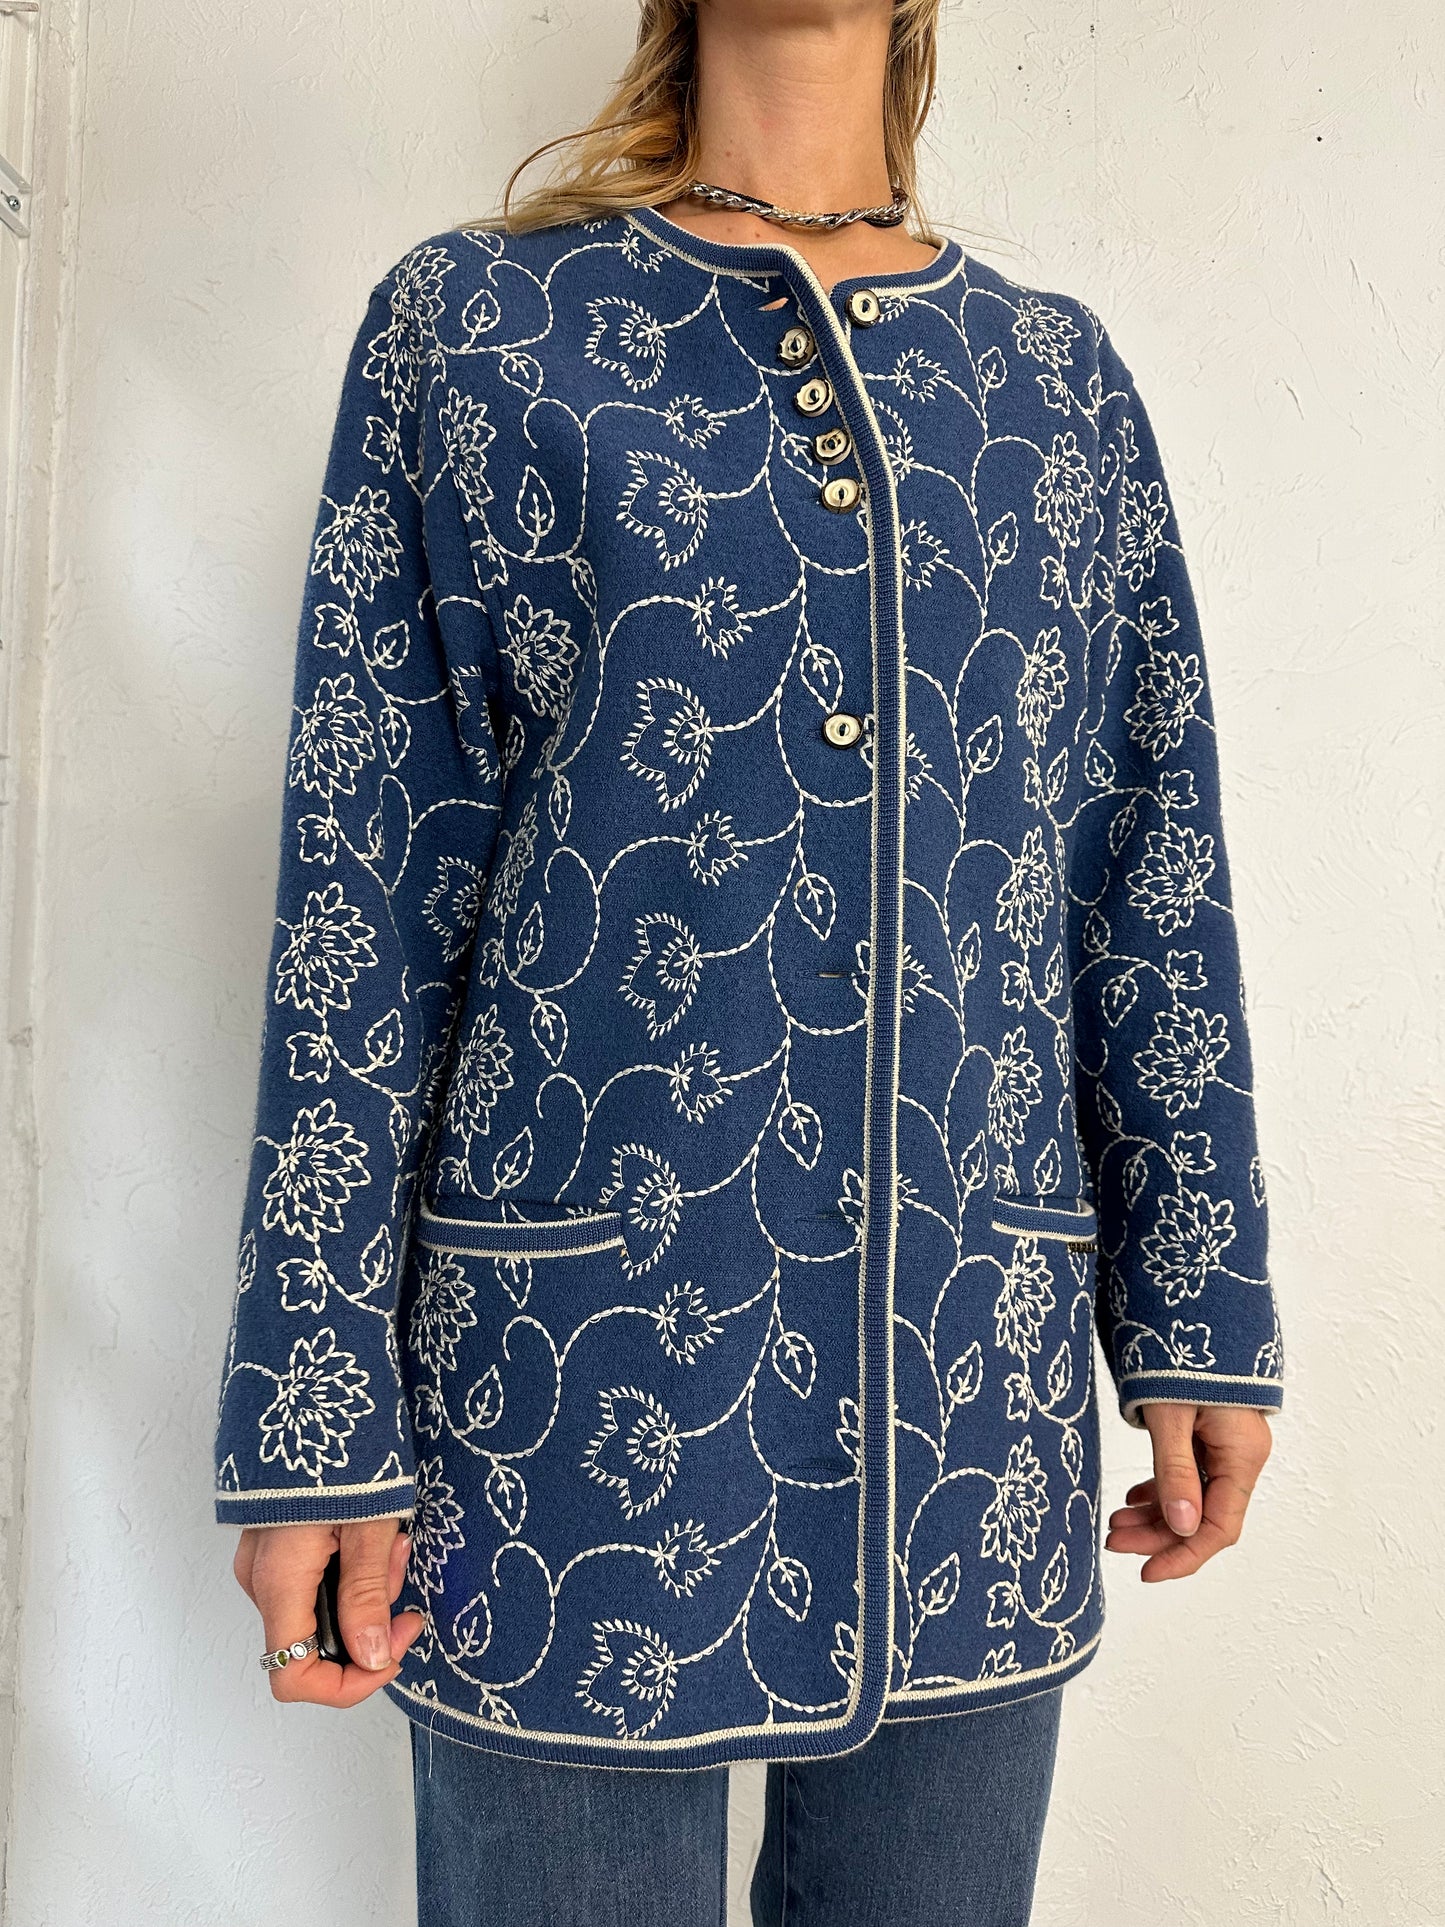 90s 'Geiger' Blue Wool Embroidered Jacket / Medium